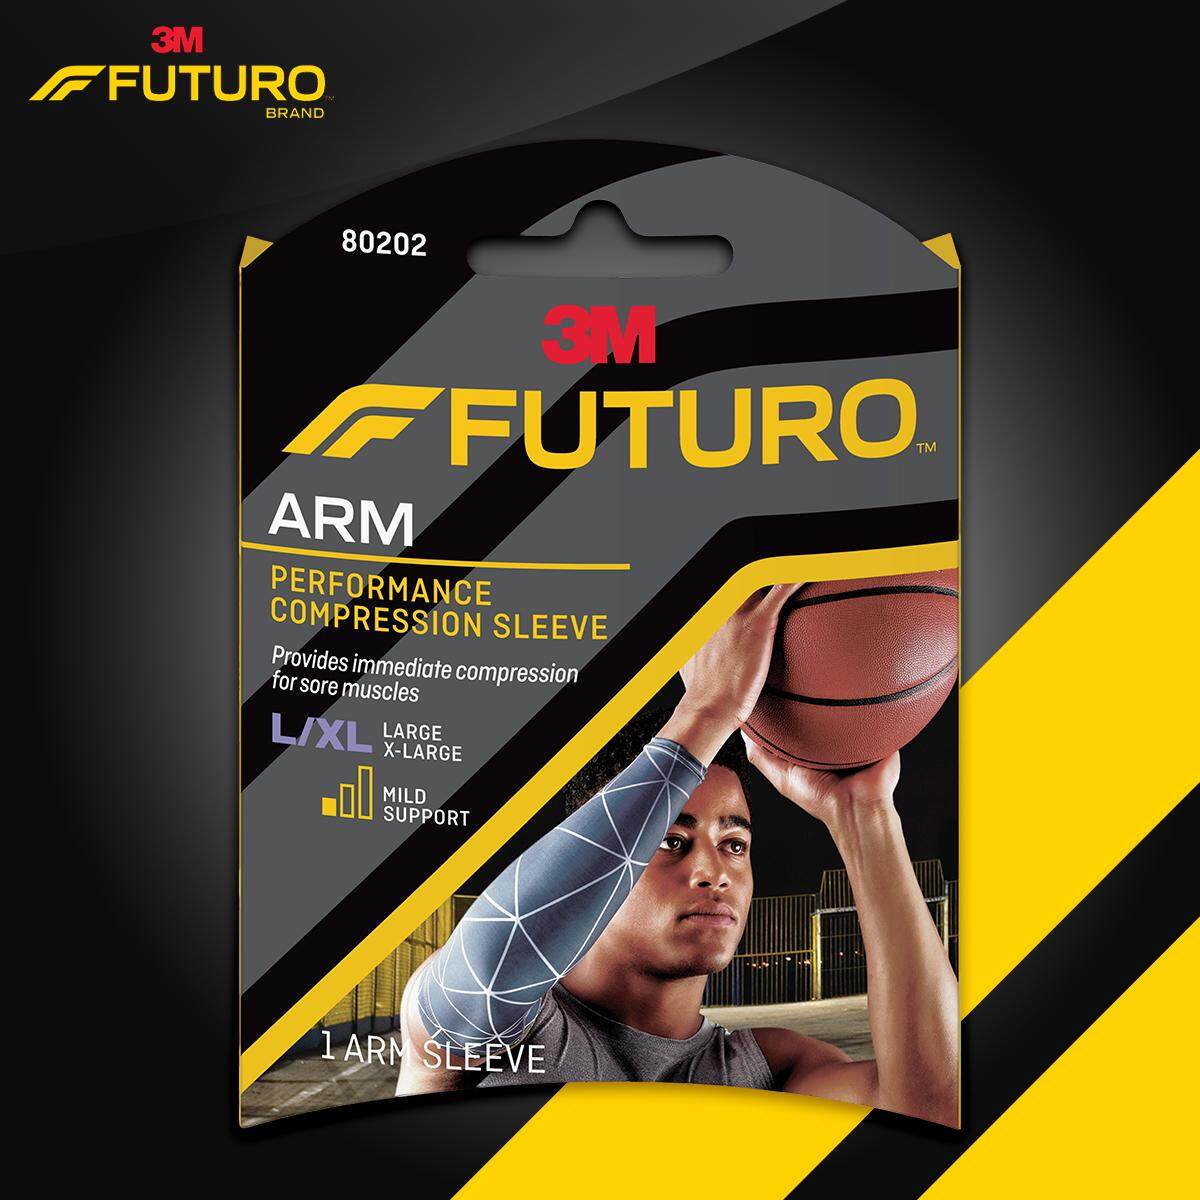 Futuro™ Performance Compression Arm Sleeve L/XL ฟูทูโร่™ อุปกรณ์รัดกล้ามเนื้อแขน (ขนาดใหญ่-ใหญ่พิเศษ)